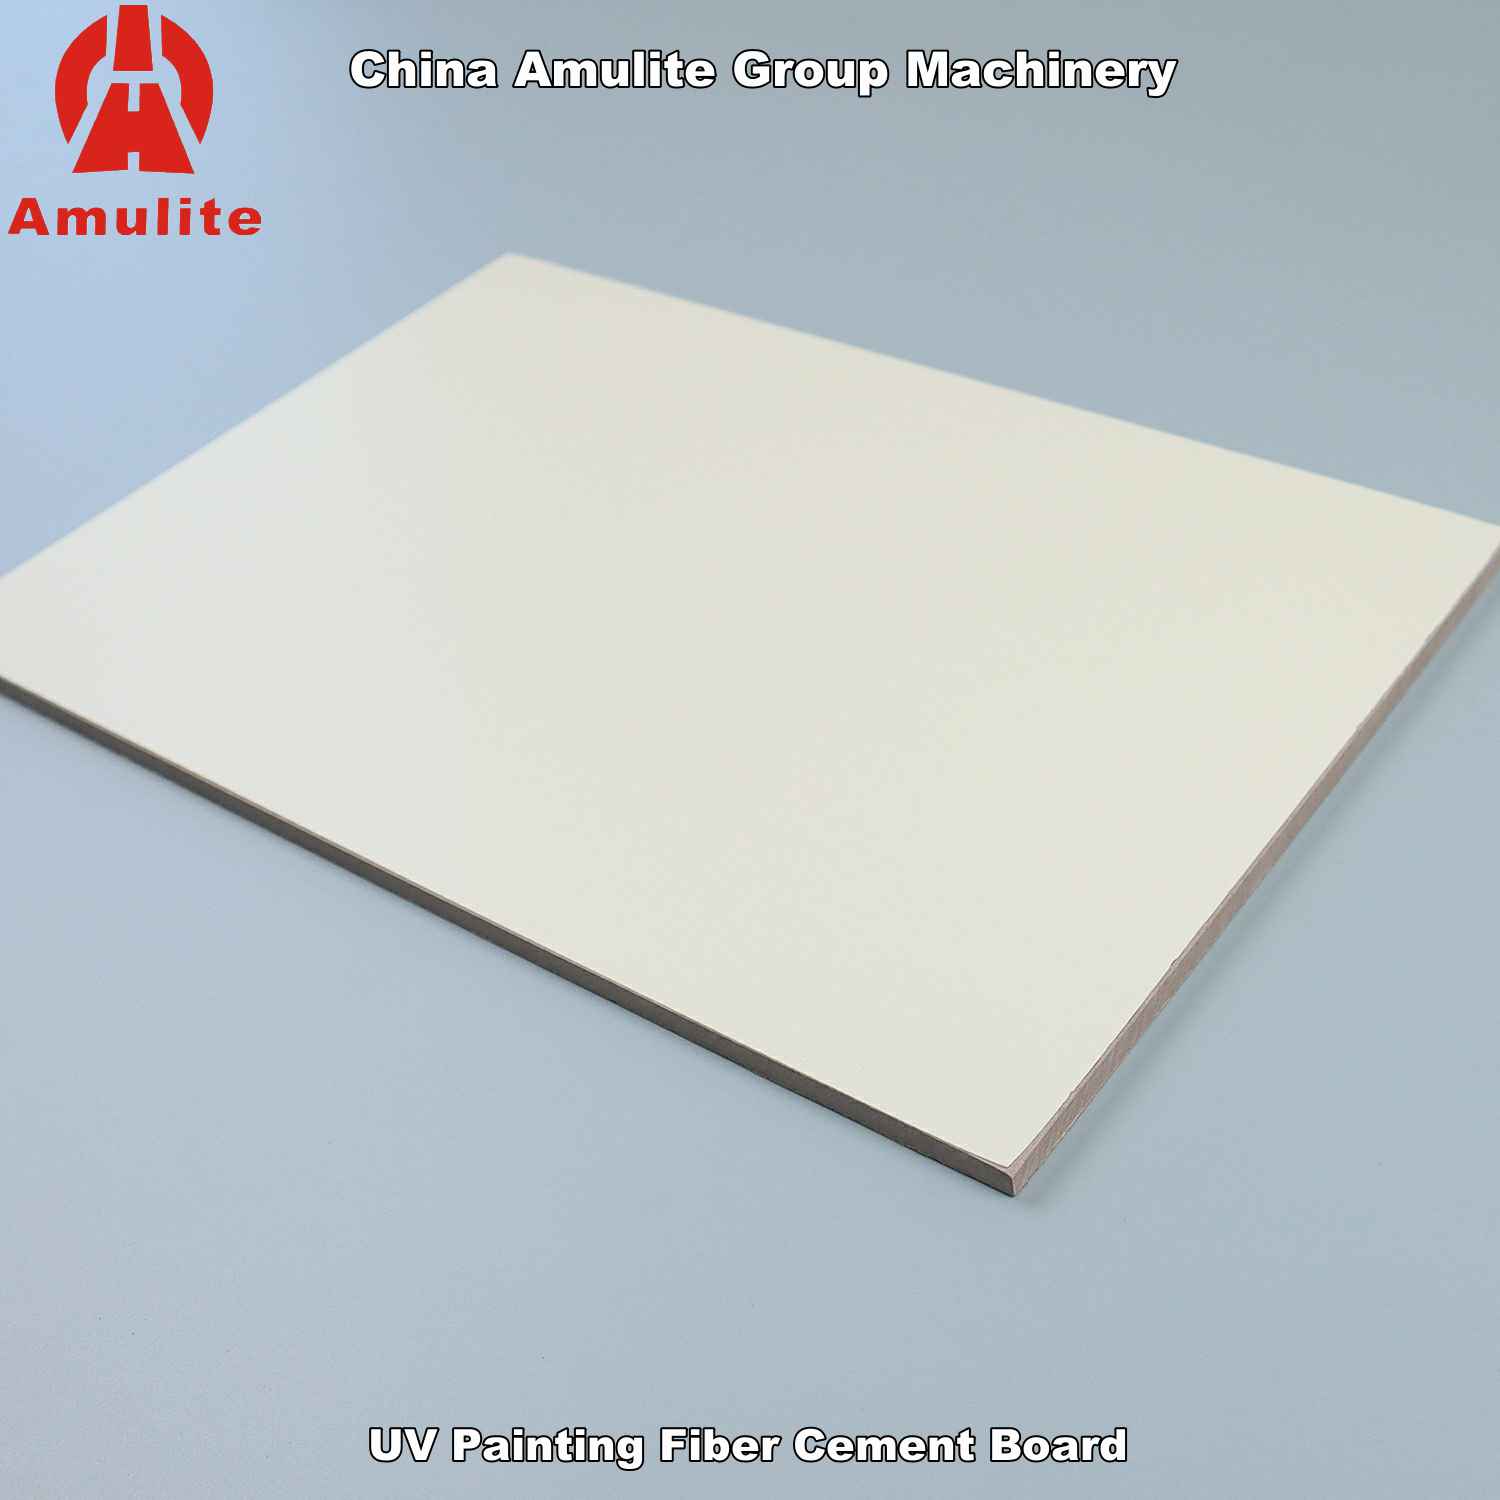 UV Painting Fiber Cement Board (15)